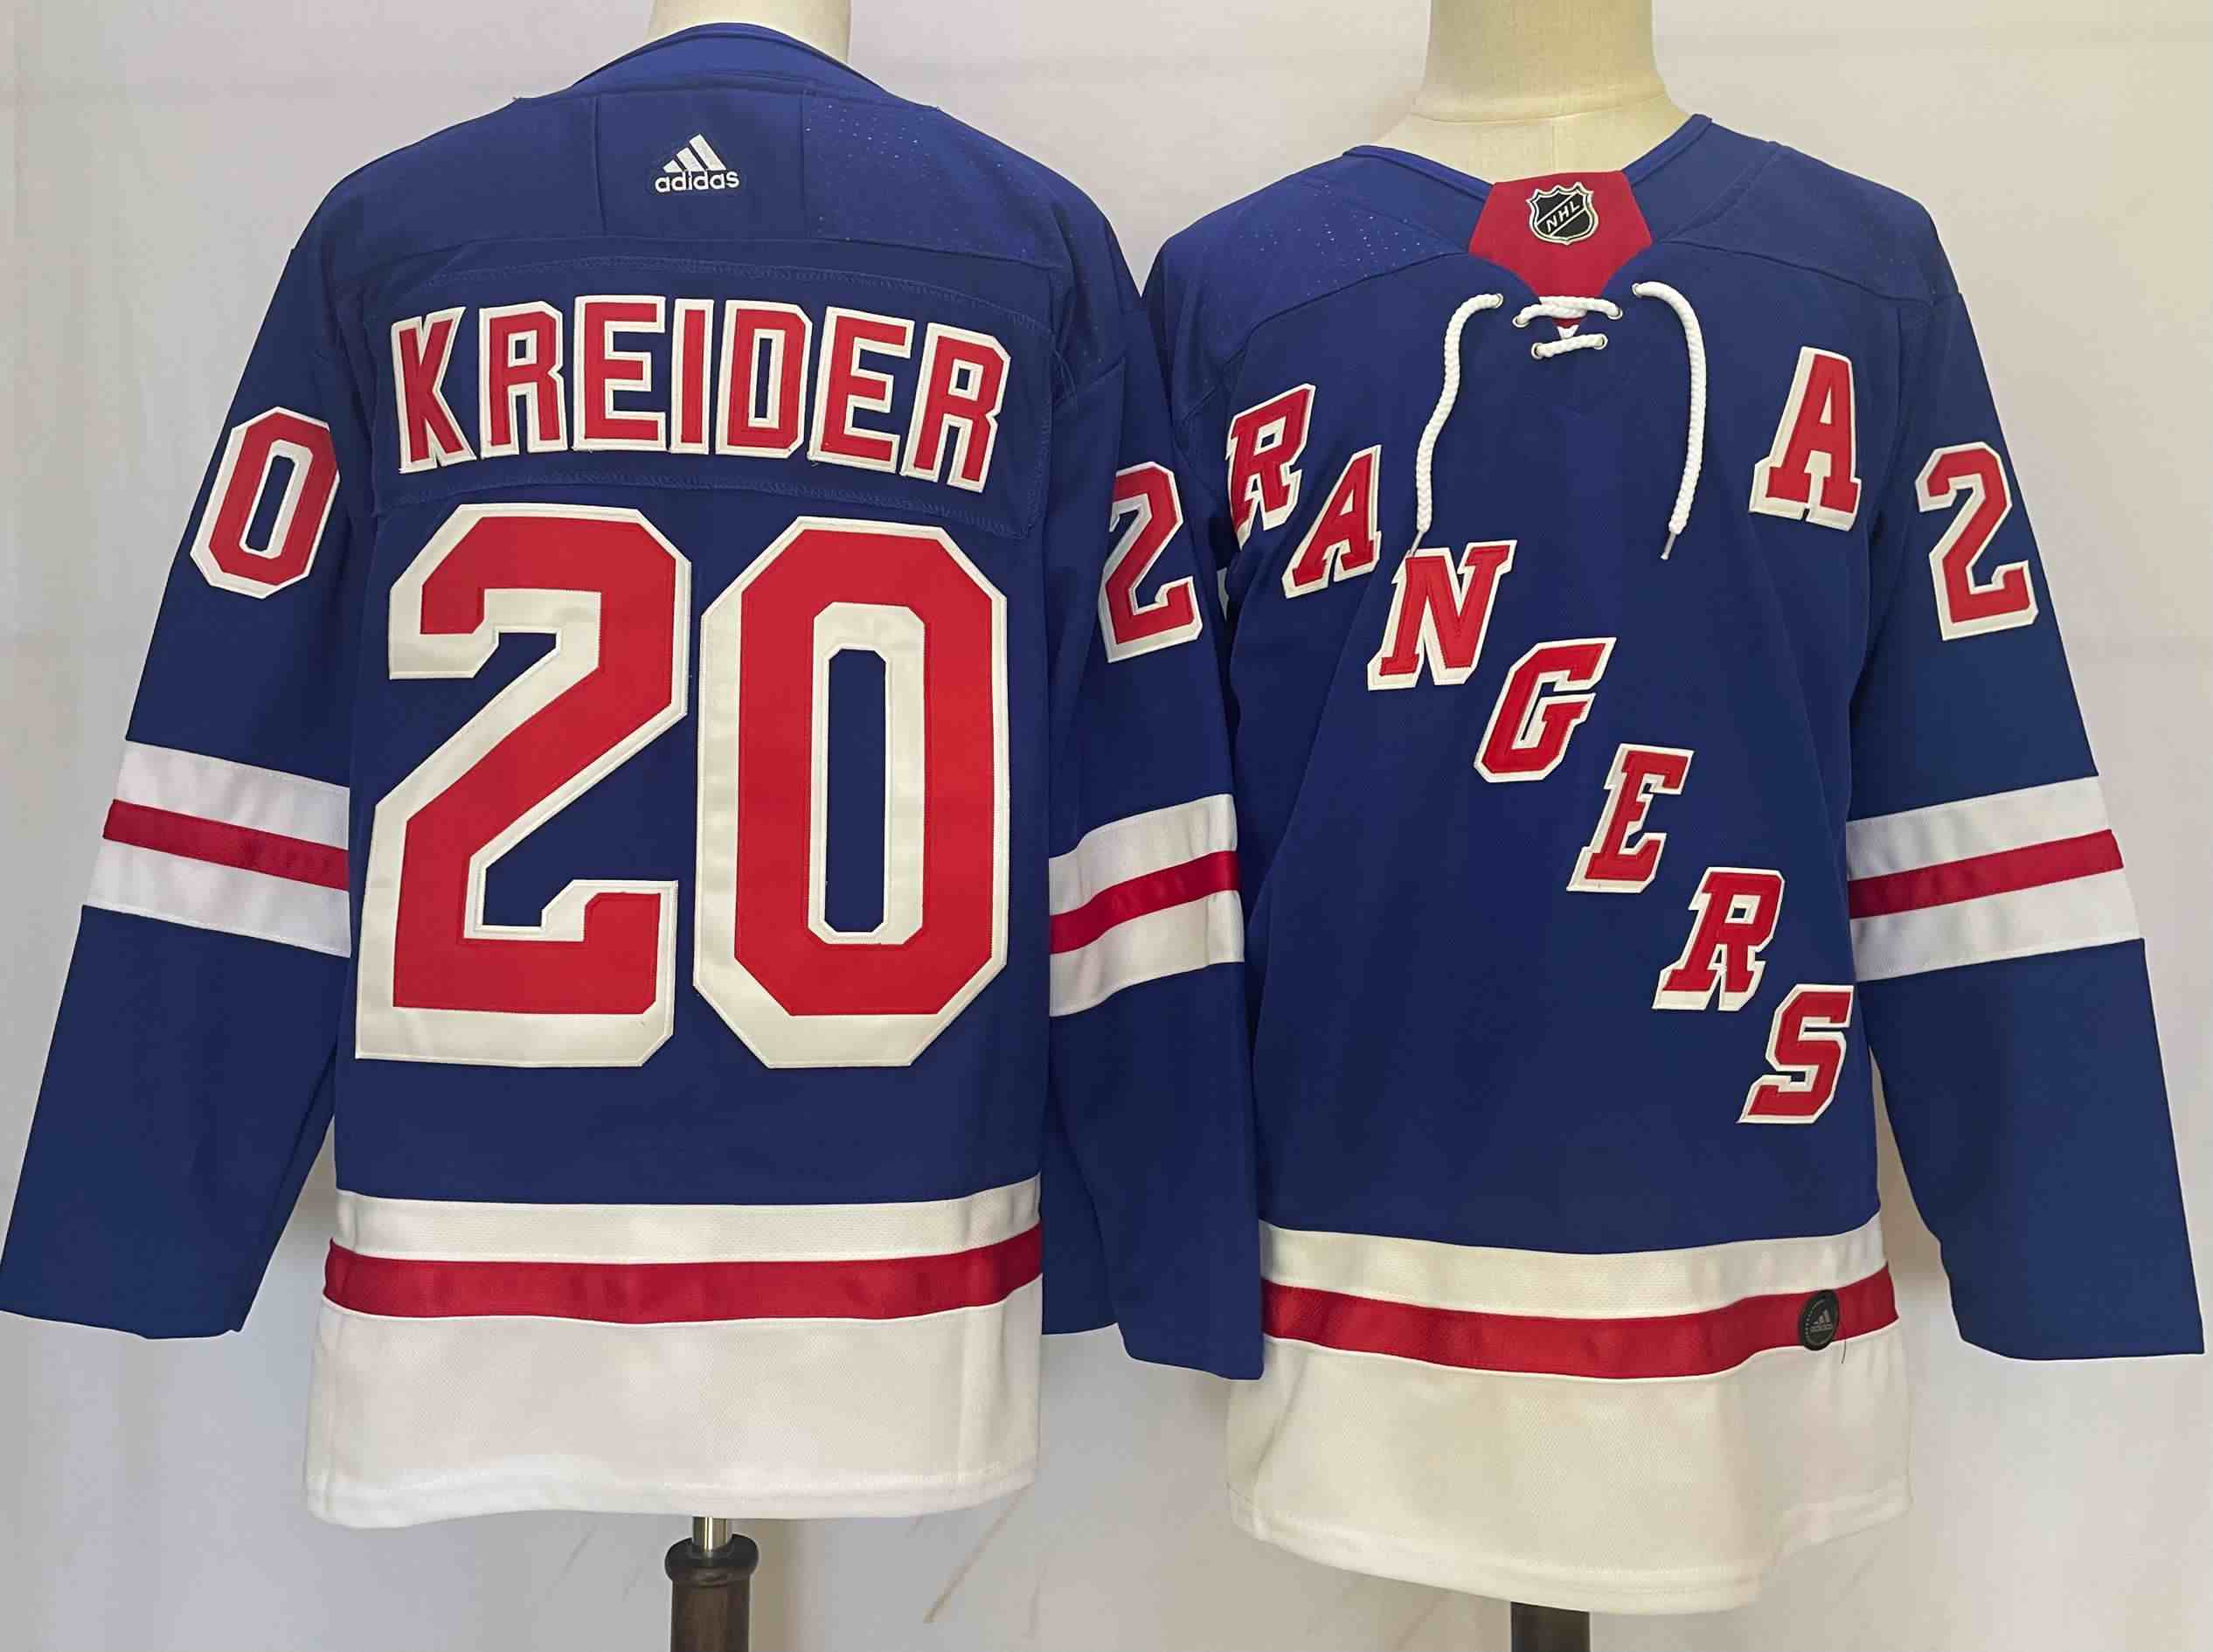 Men's New York Rangers #20 Chris Kreider Blue Stitched Jersey